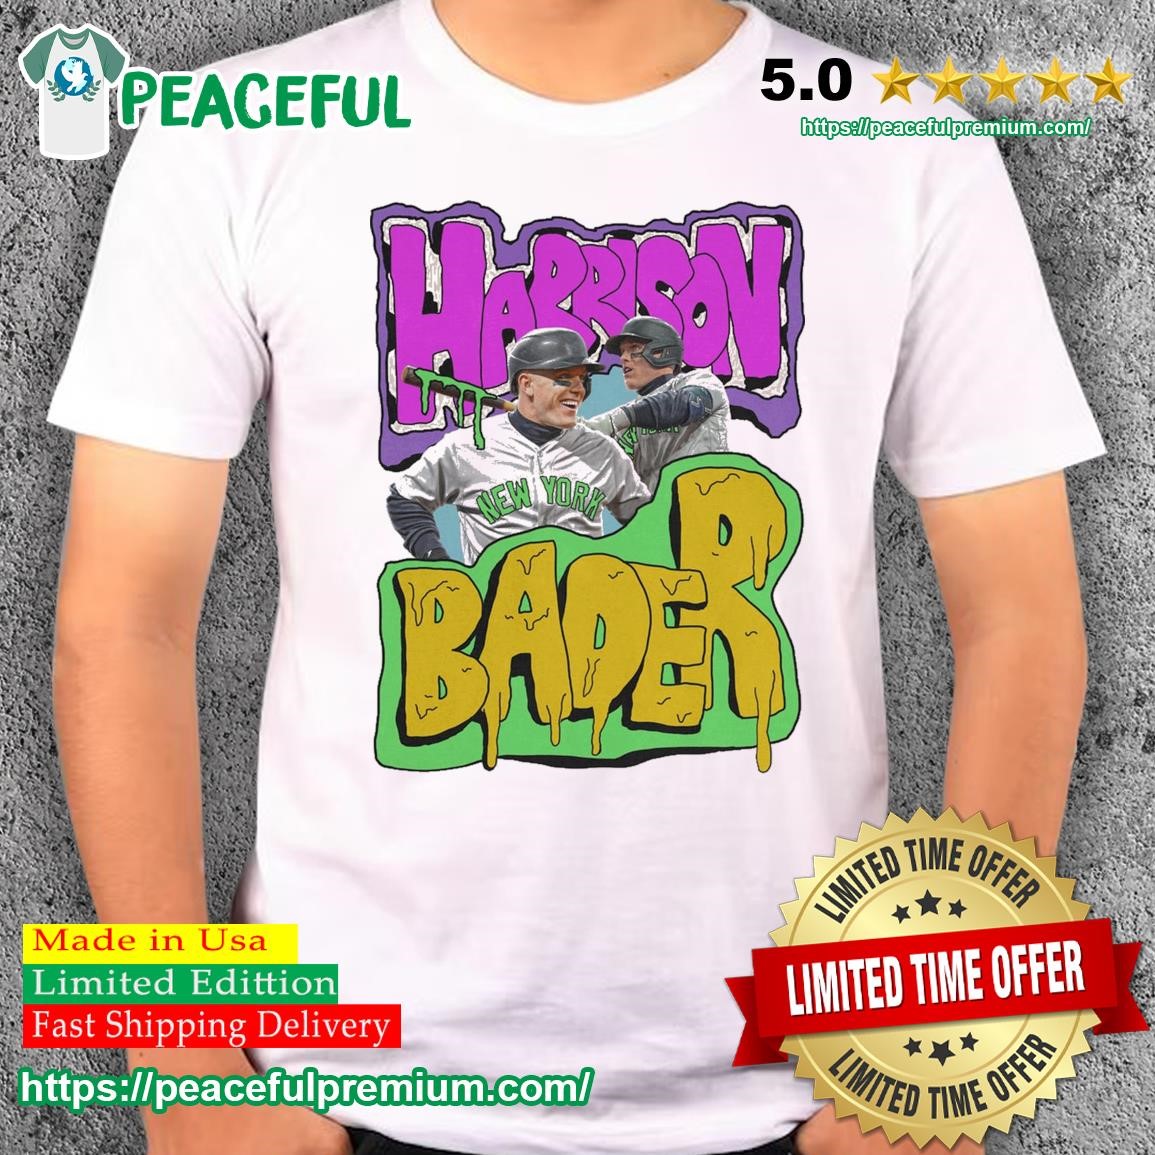 Harrison Bader T-Shirts for Sale